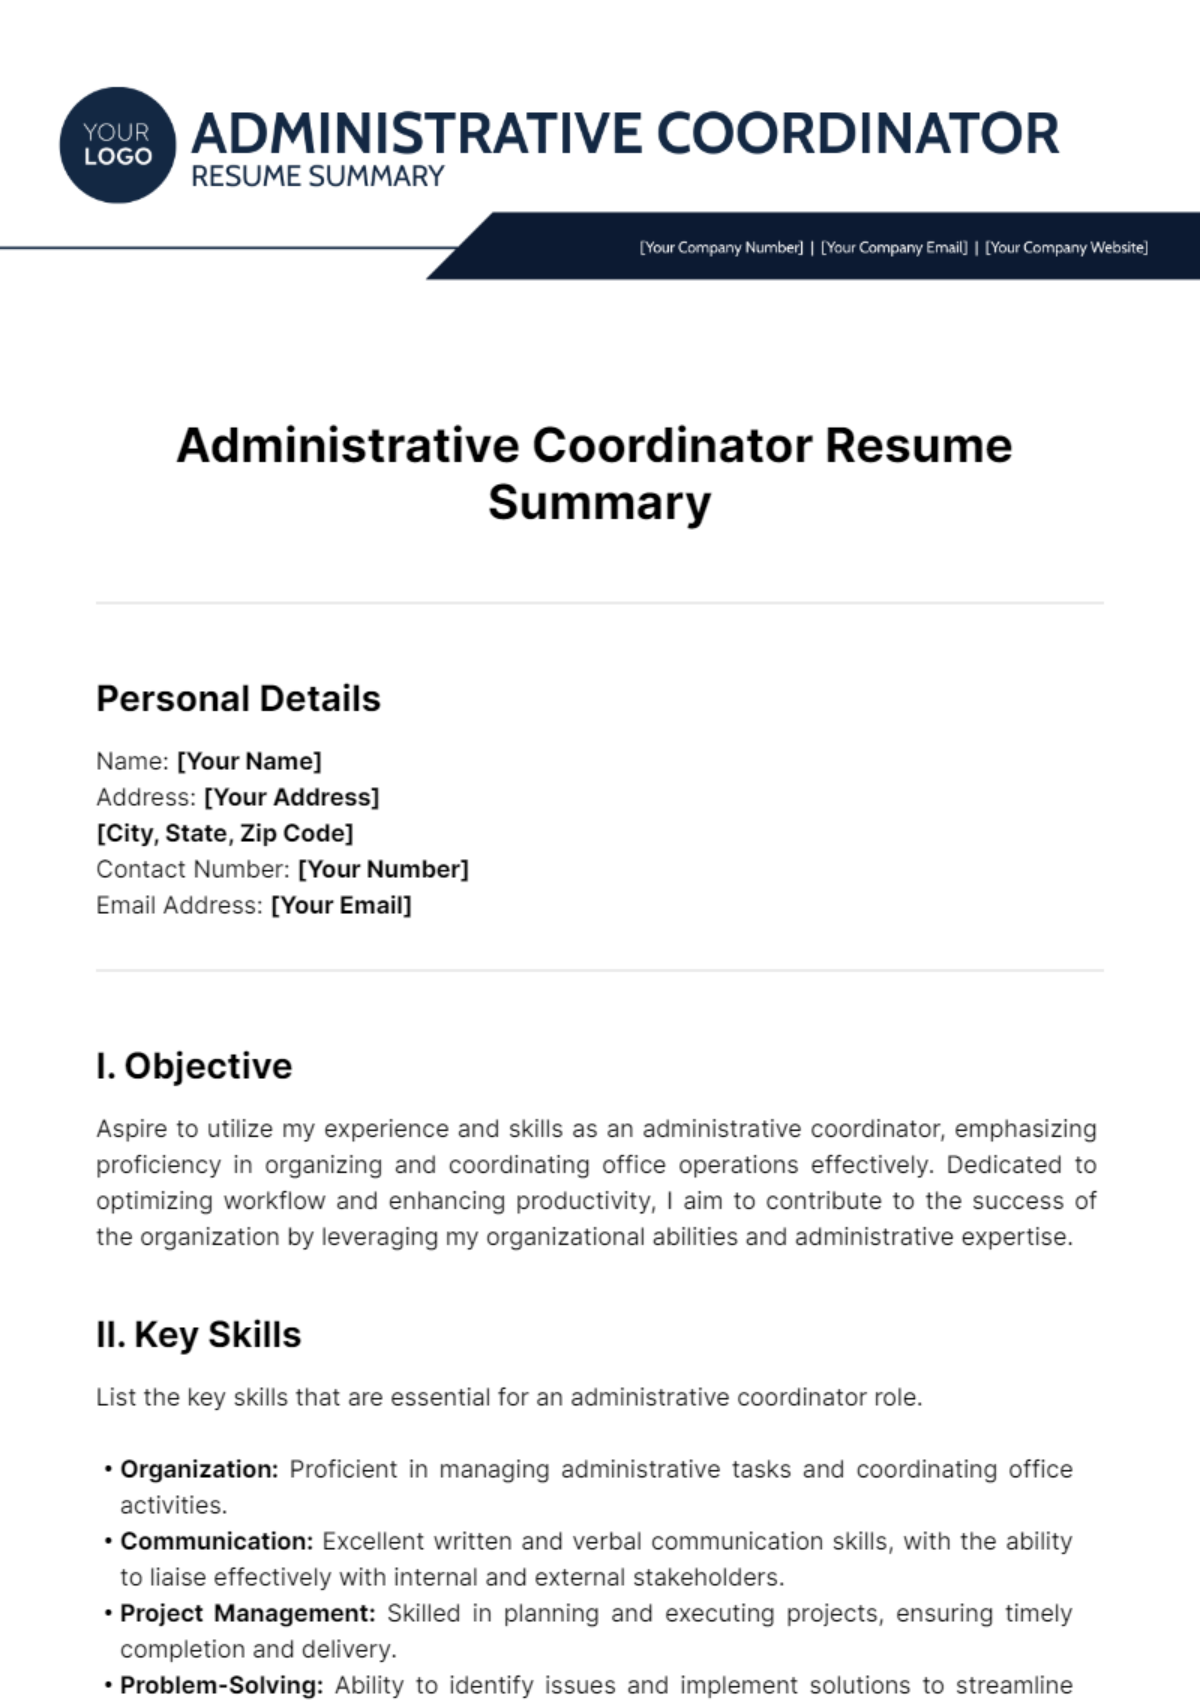 Administrative Coordinator Resume Summary Template